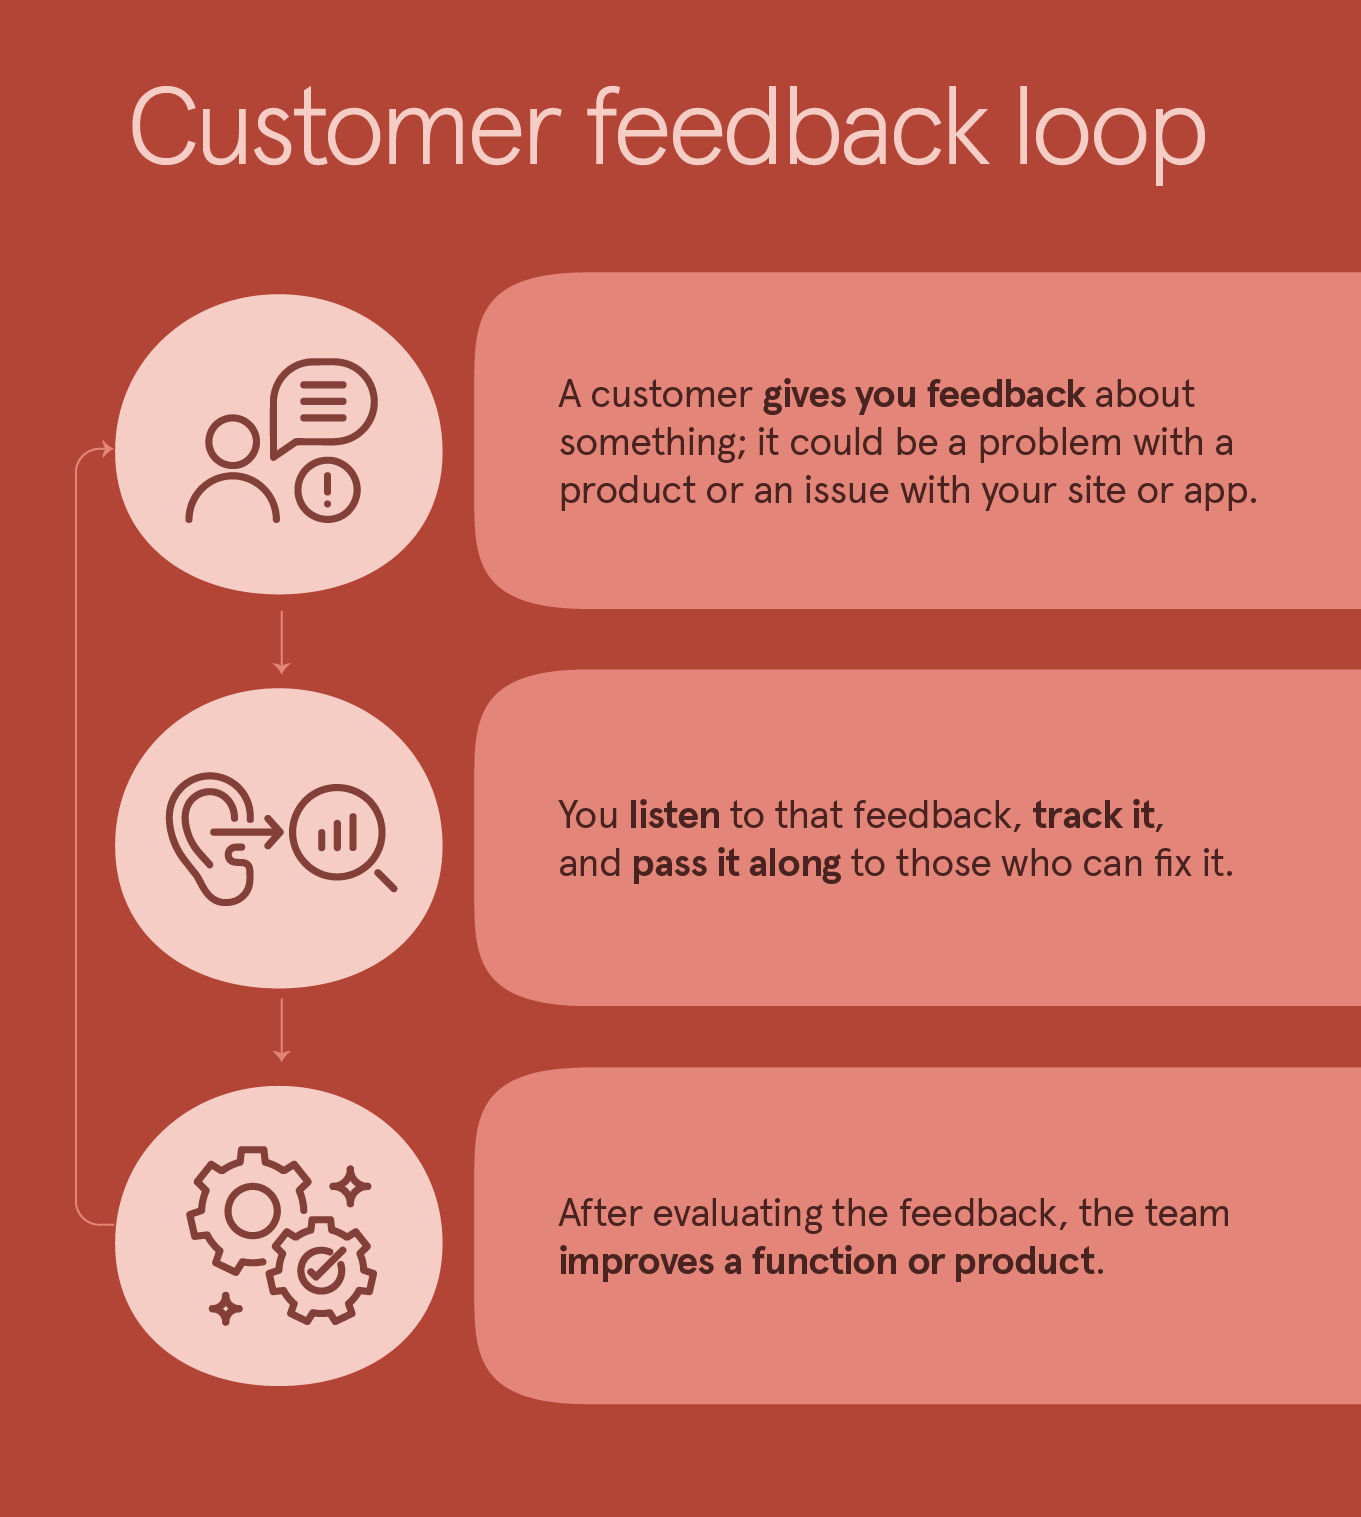 An illustration explaining how the customer feedback loop works.